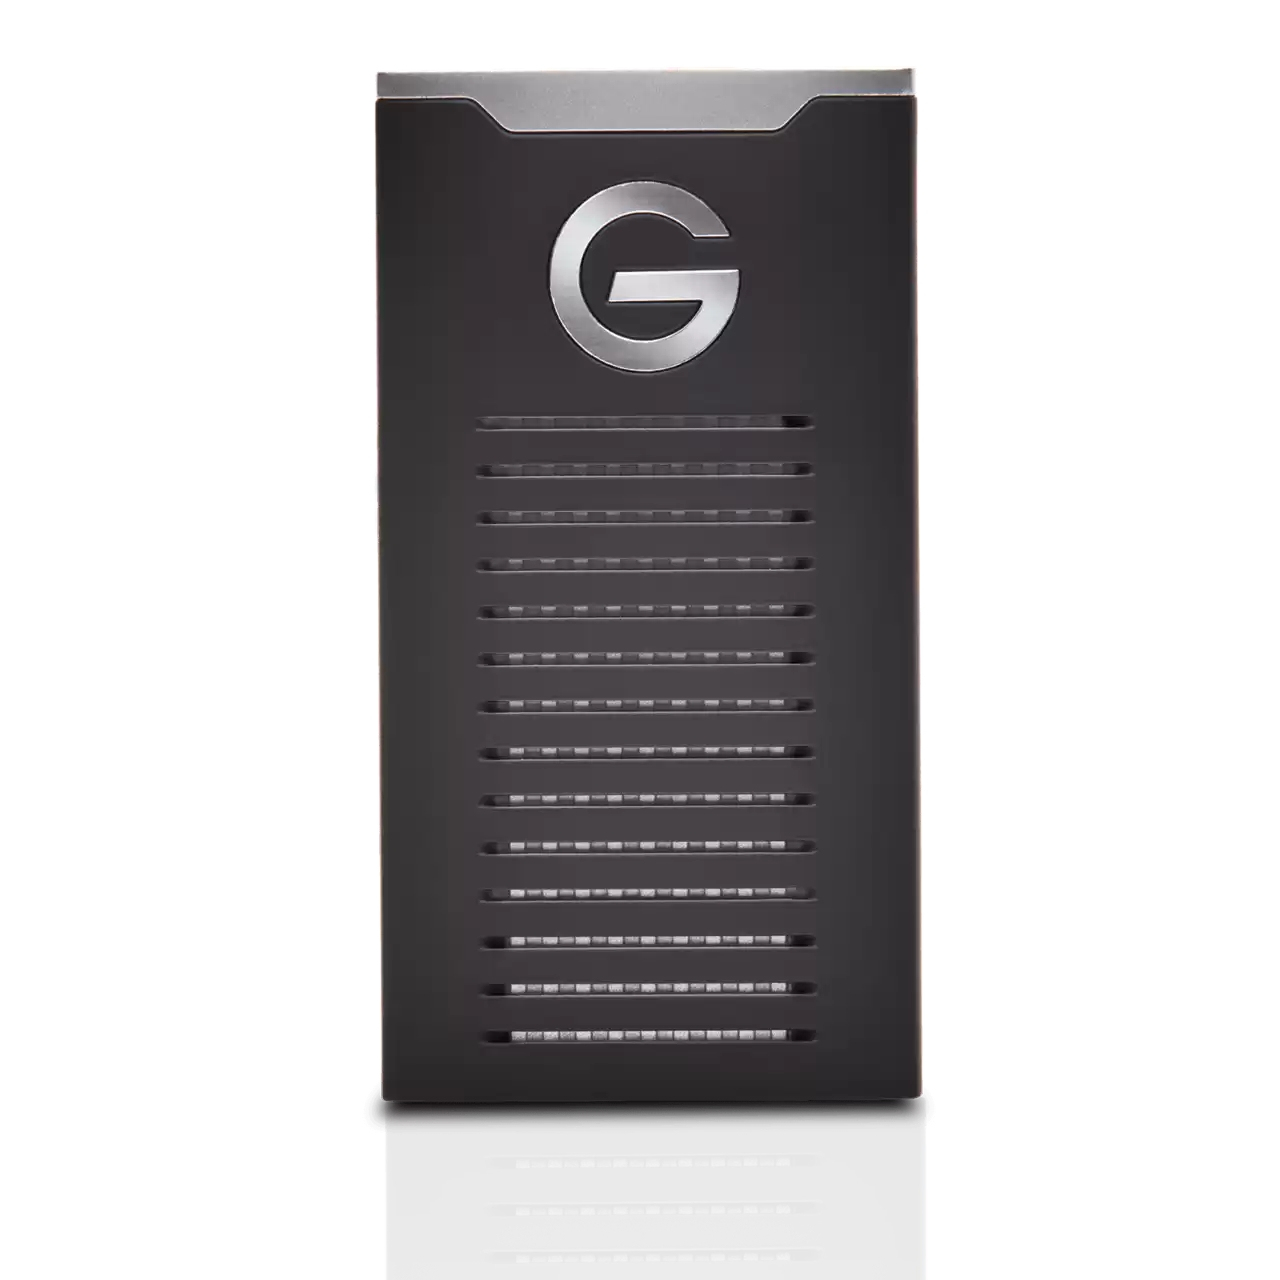 SANDISK Professional G-DRIVE SSD 500GB M.2-2280 1050MB/s USB-C 10Gbps USB 3.2 Gen 2 Ultra-Rugged Portable NVMe SSD